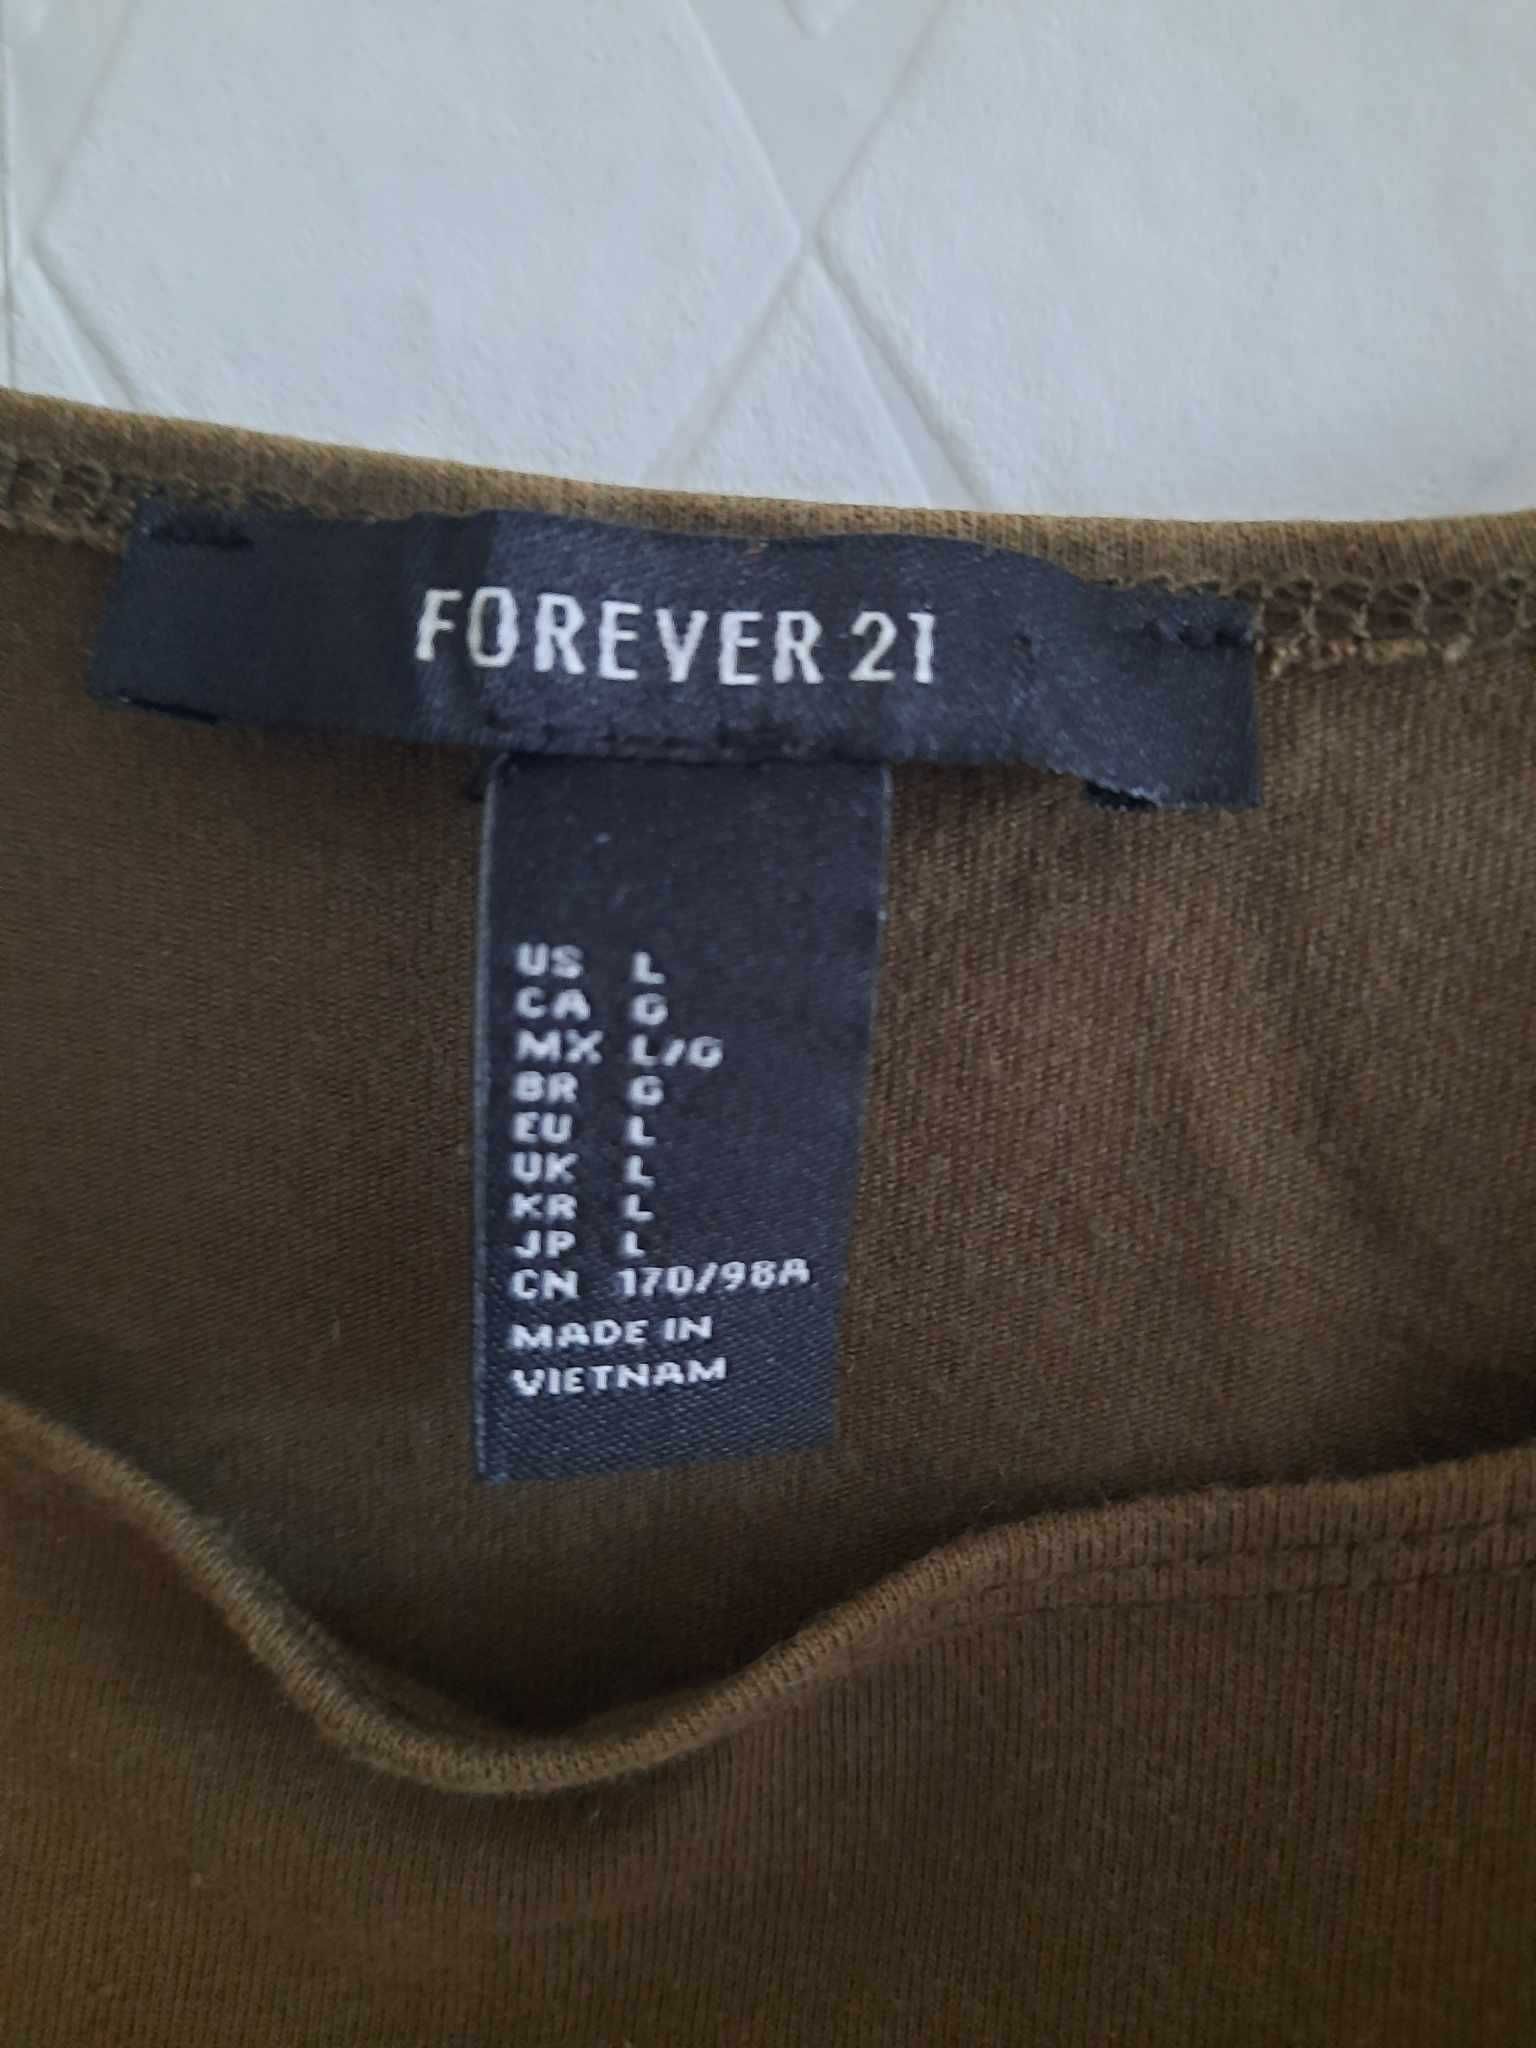 Bluzka na ramiączkach marki Forever 21